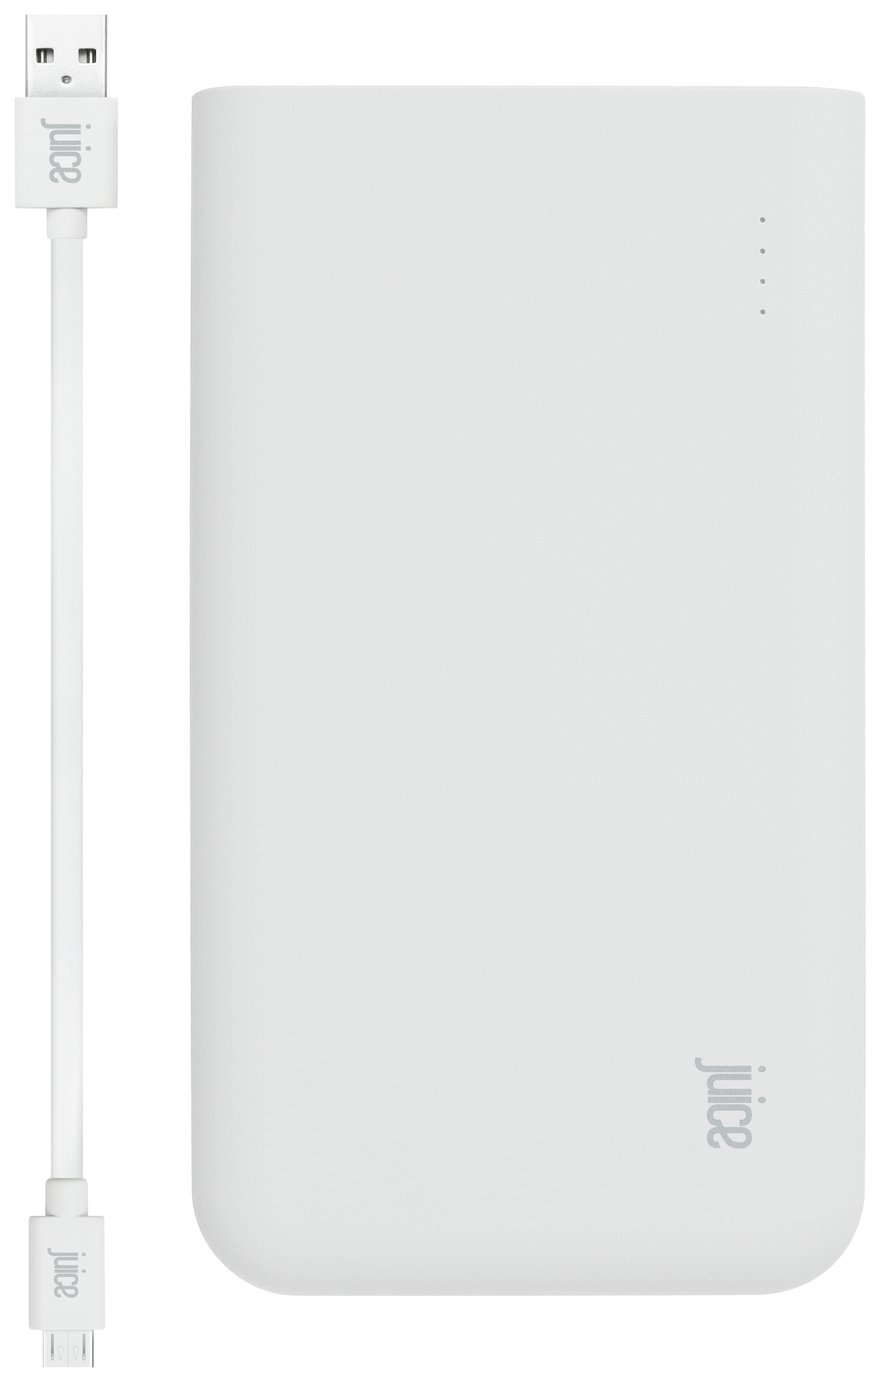 Juice Slim 5000mAh Portable Power Bank - White